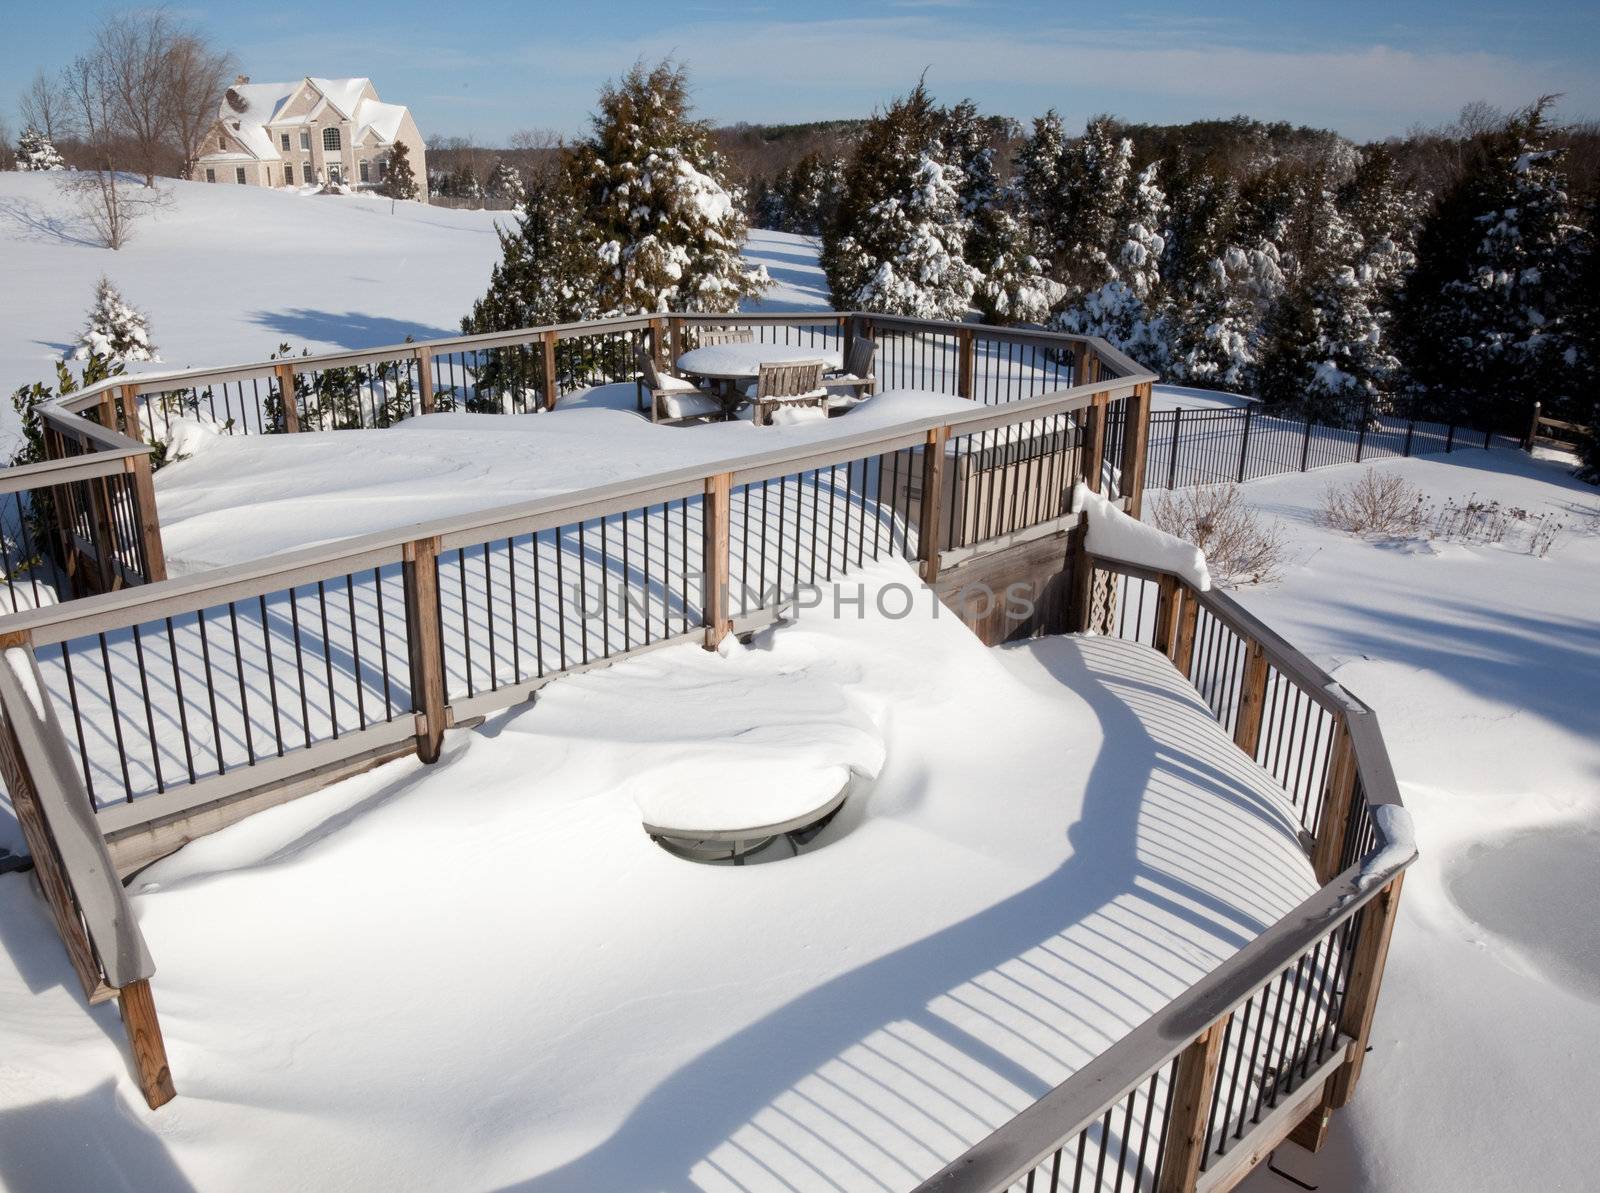 Snowy modern deck by steheap